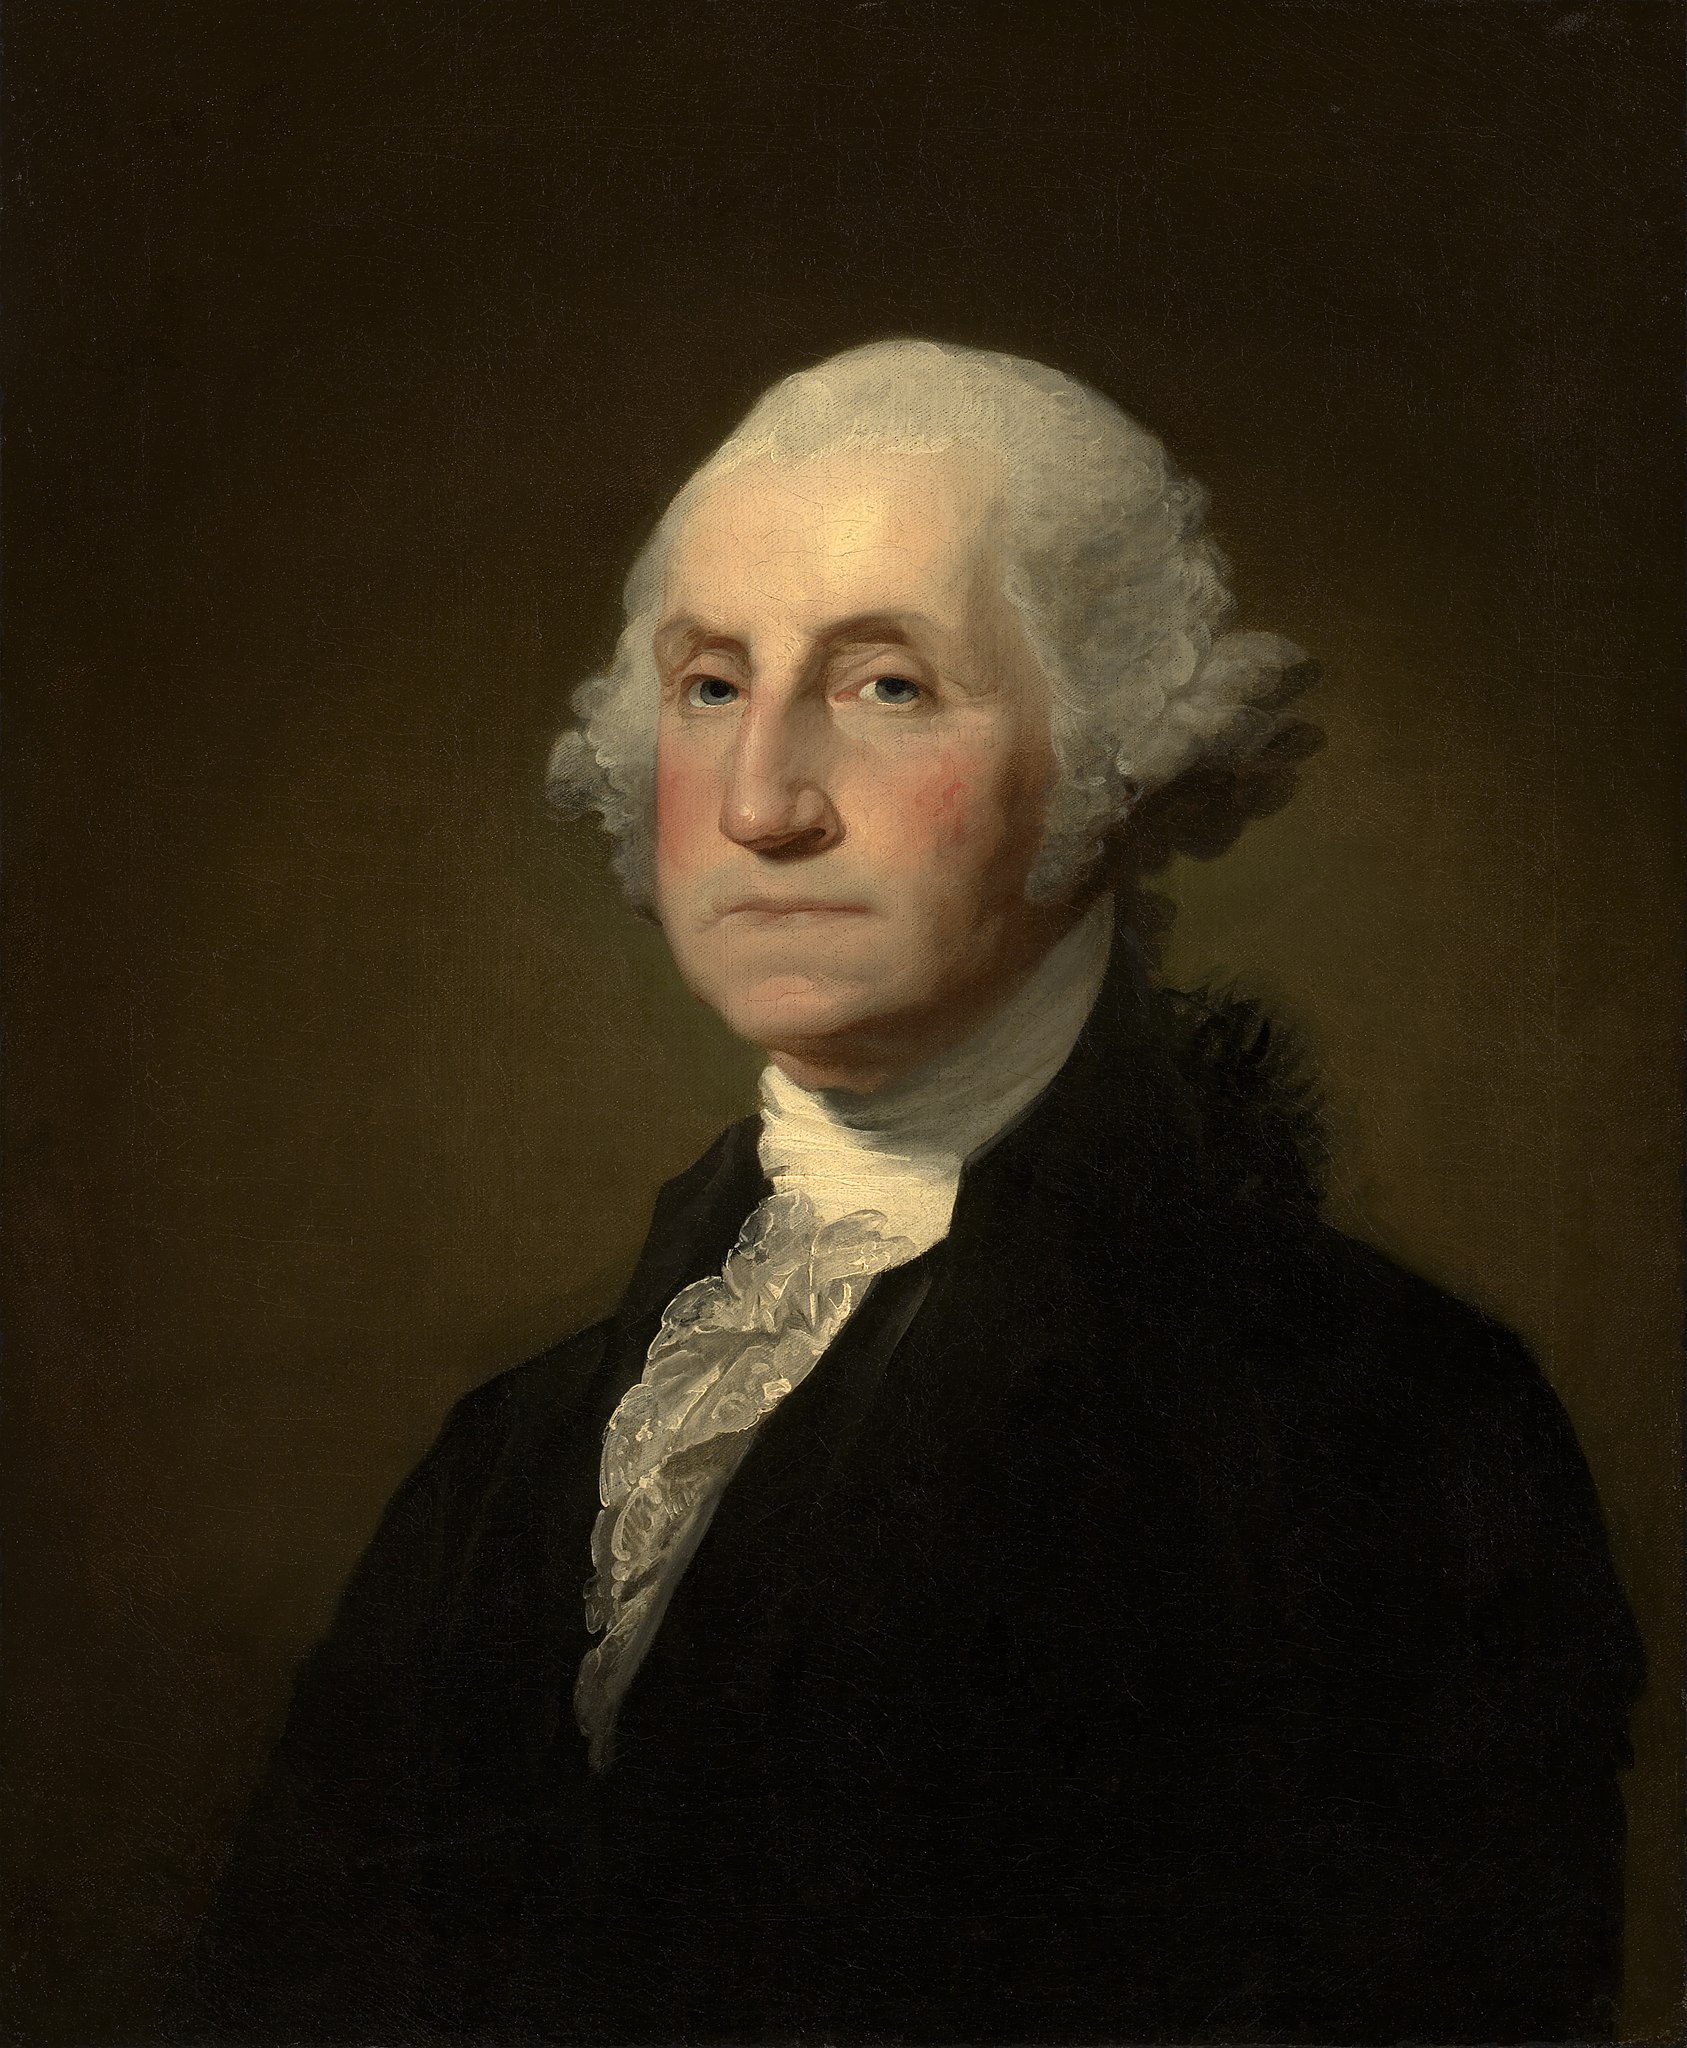 A painted portrait of George Washington